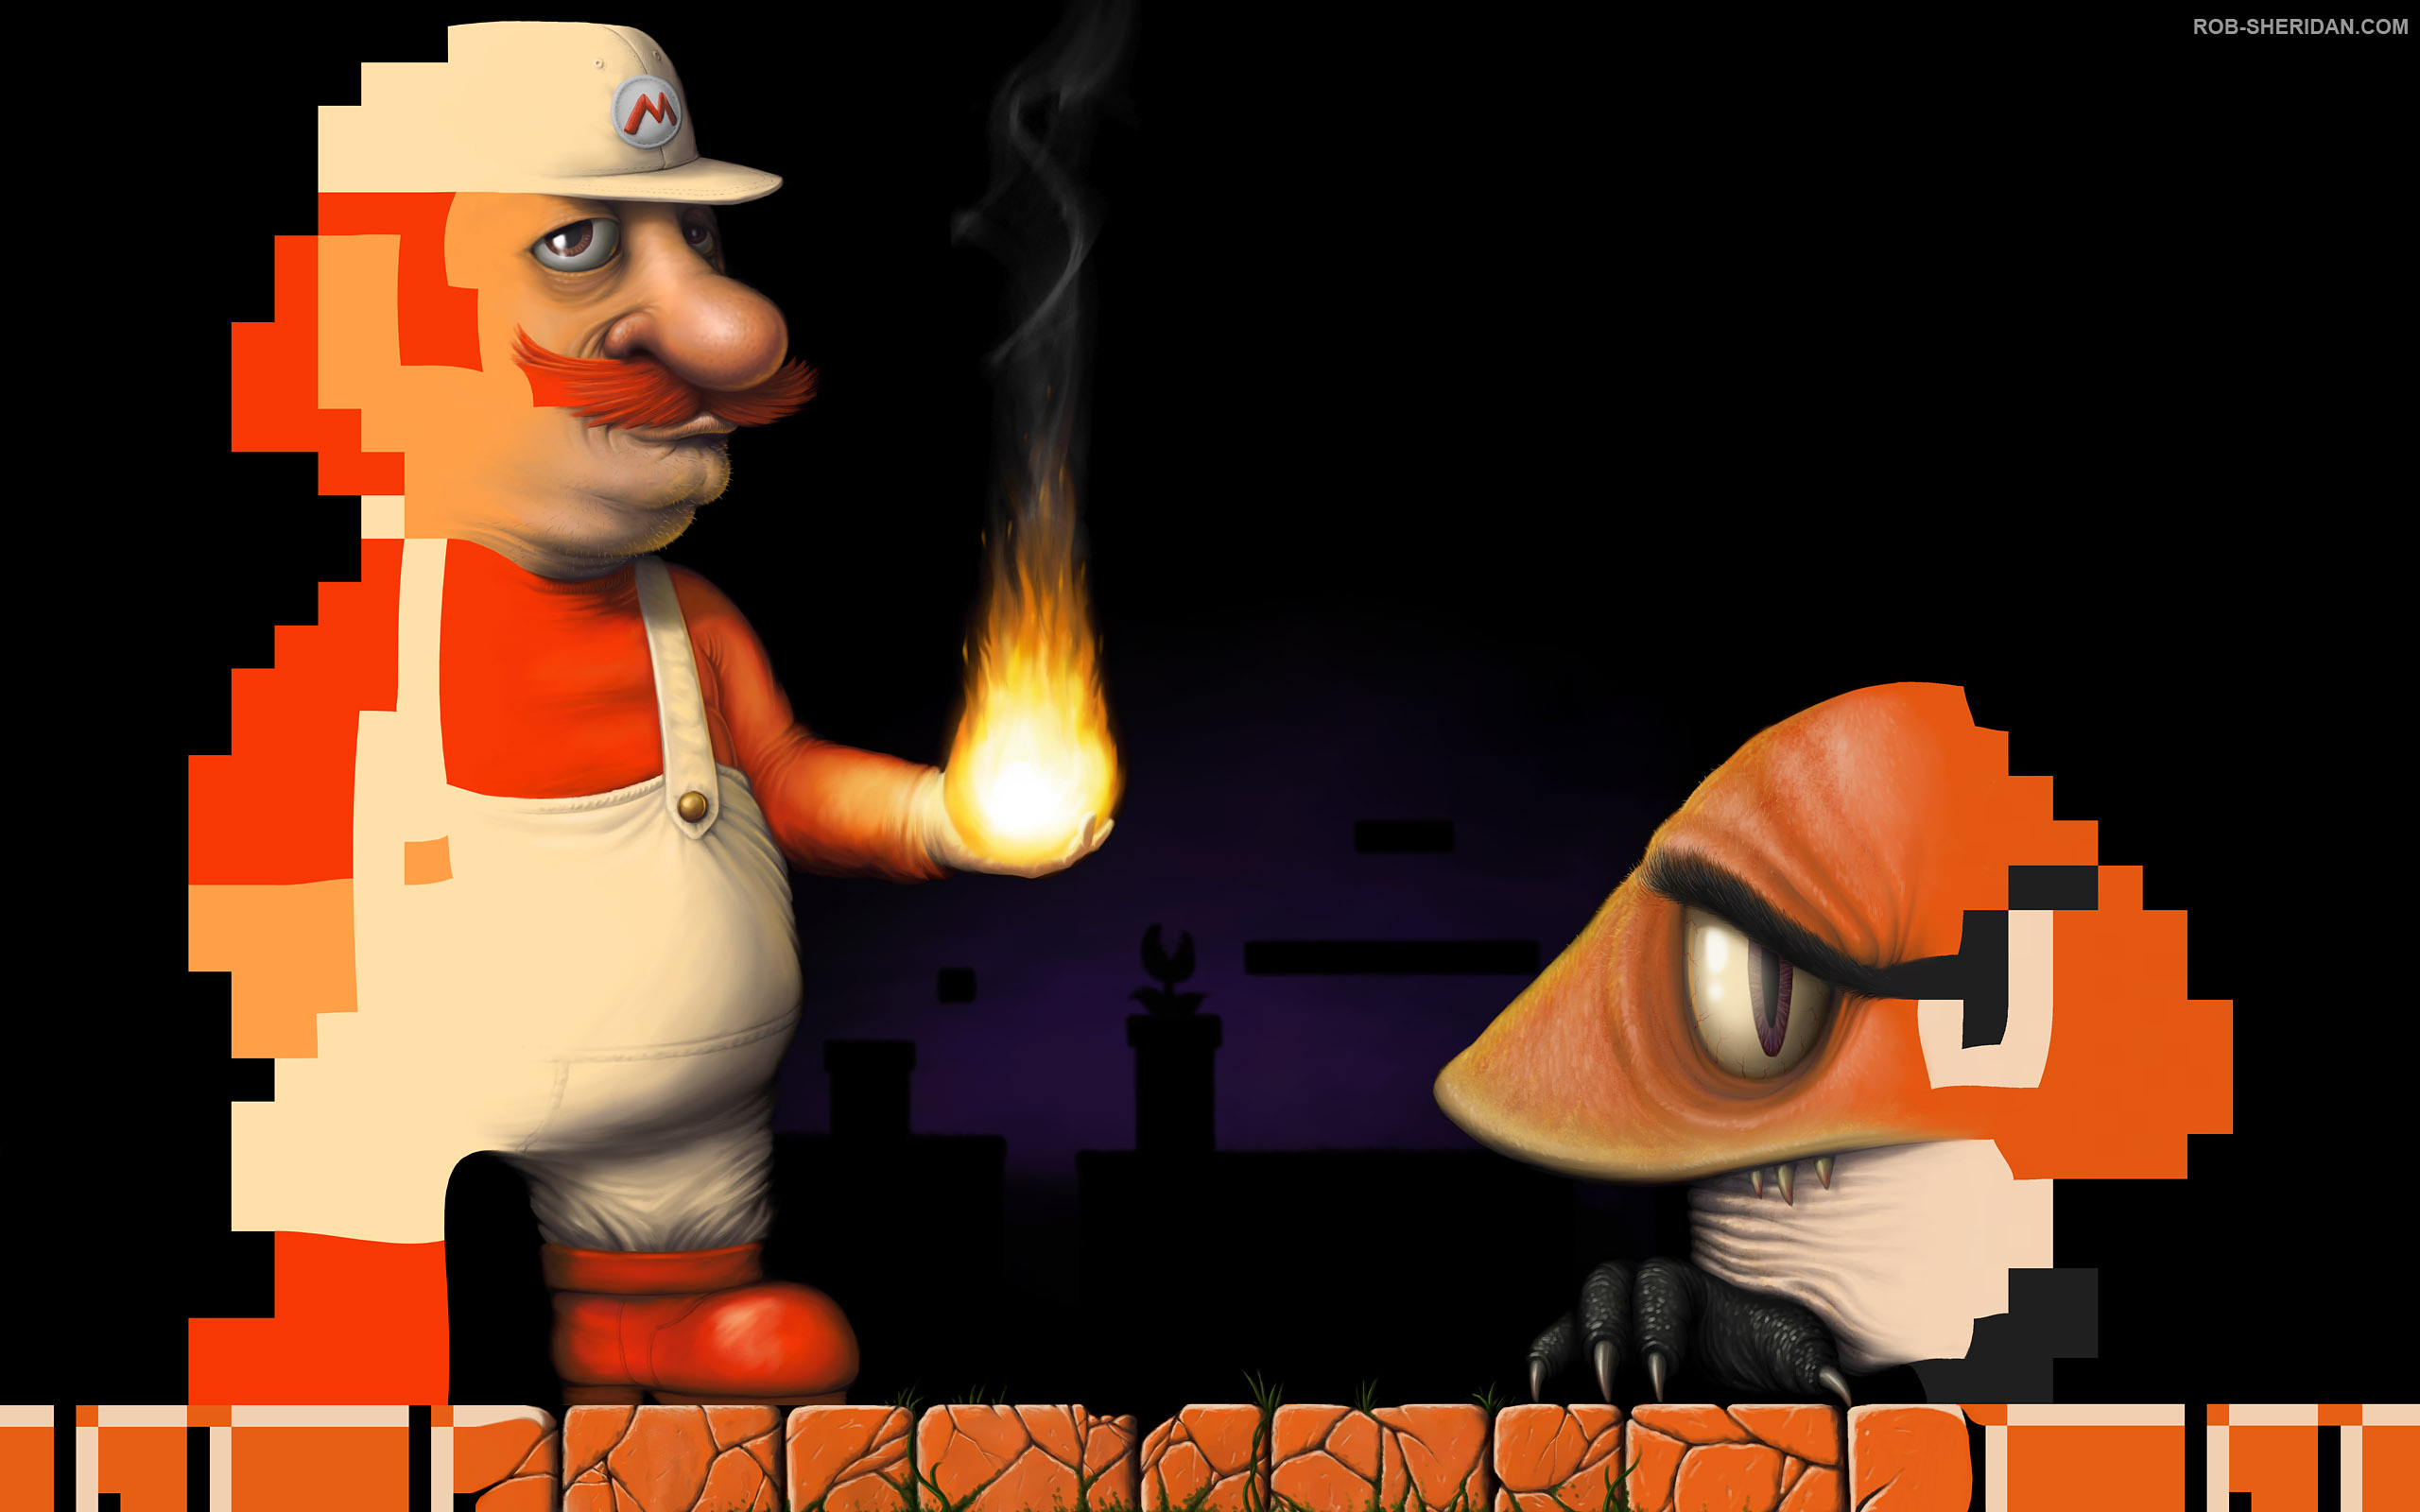 Mario facing off against a Goomba in a visually stunning desktop wallpaper.